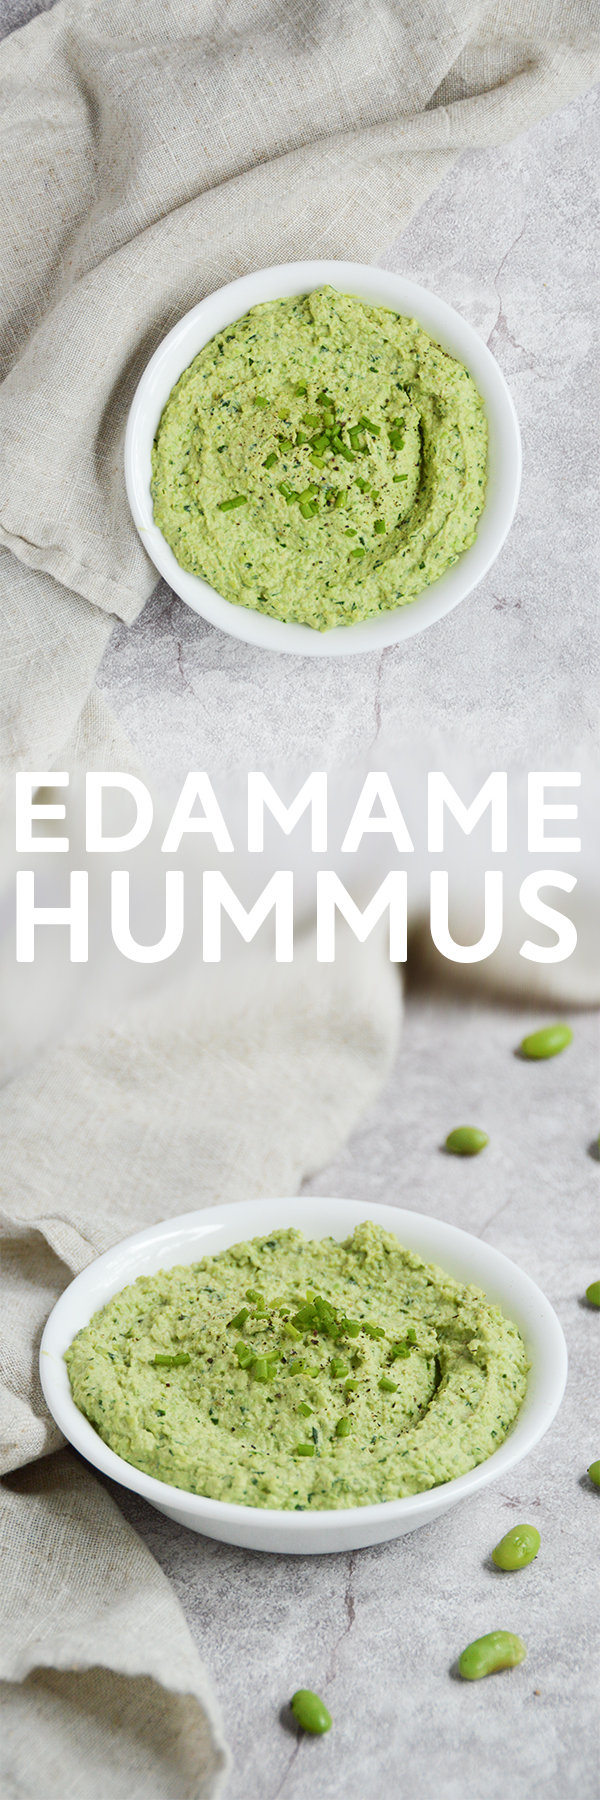 Edamame Hummus - This simple edamame hummus makes for the perfect dip or sandwich spread! #hummus #recipe #vegan #plantbased https://pumpsandiron.com